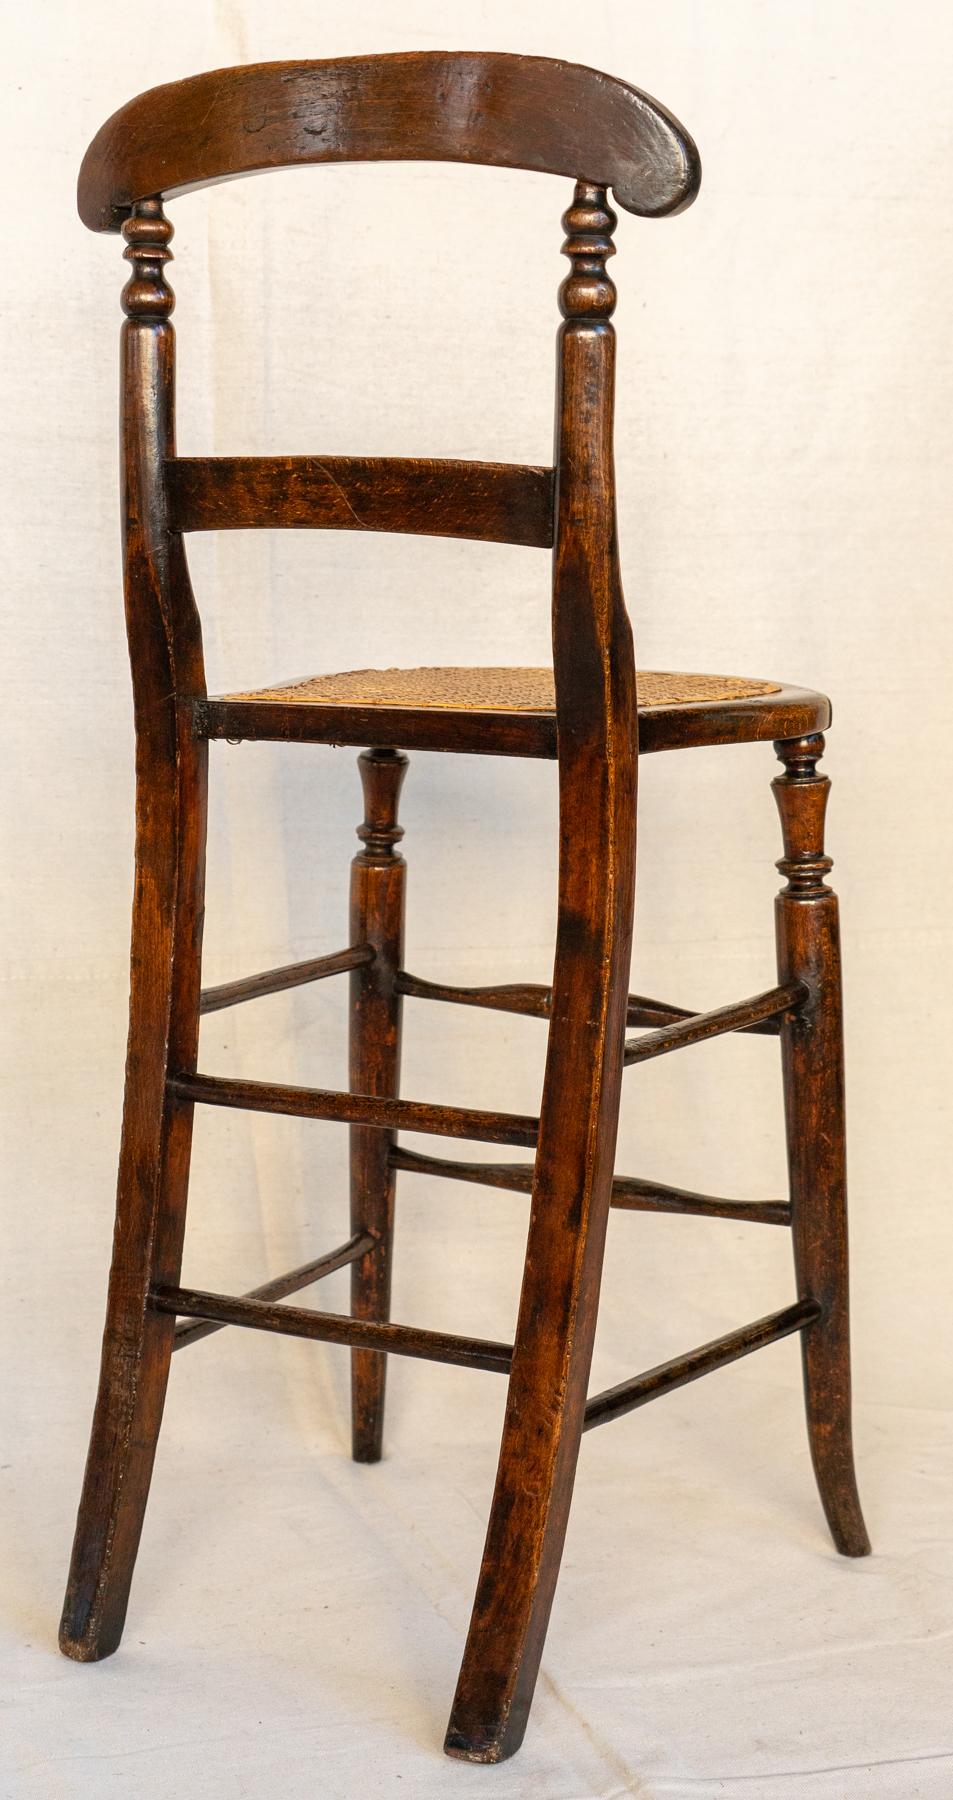 Cane 19th Century English Posture/Discipline Chair, Circa 1860 For Sale